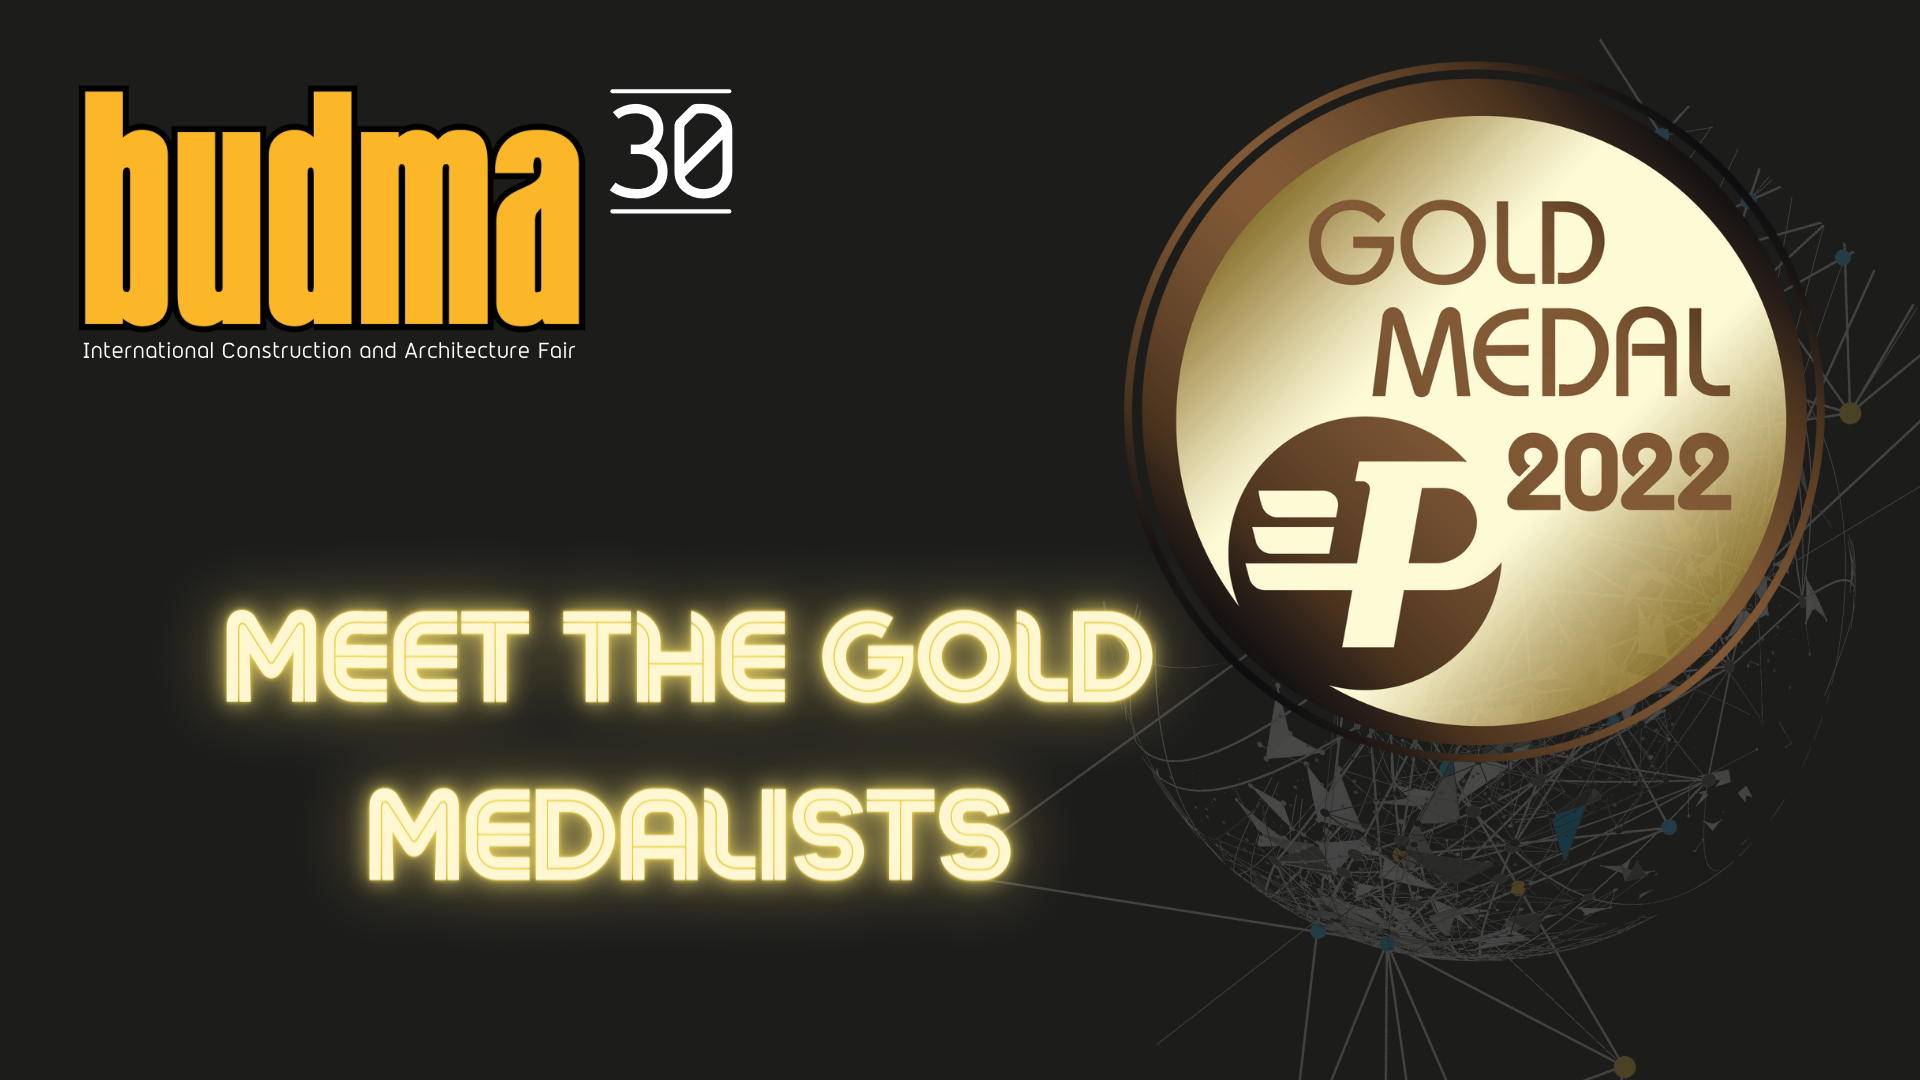 BUDMA gold medalists